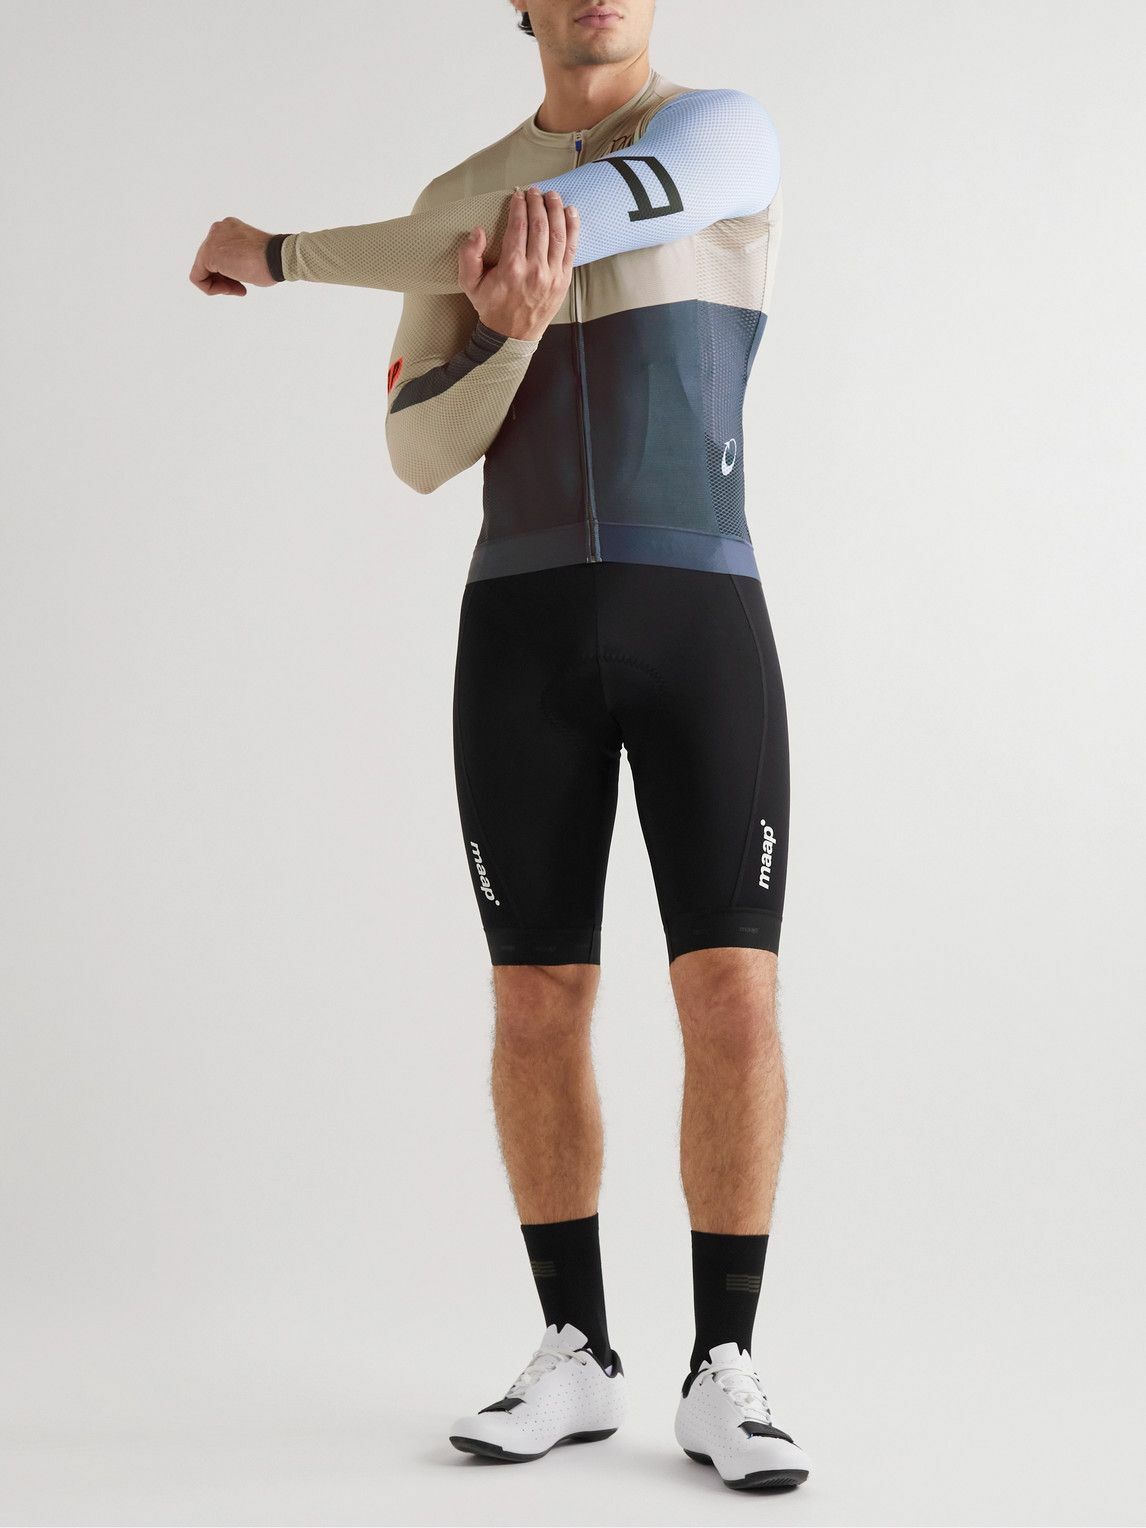 MAAP - Adapt Pro Air Recycled-Mesh Cycling Jersey - Gray MAAP